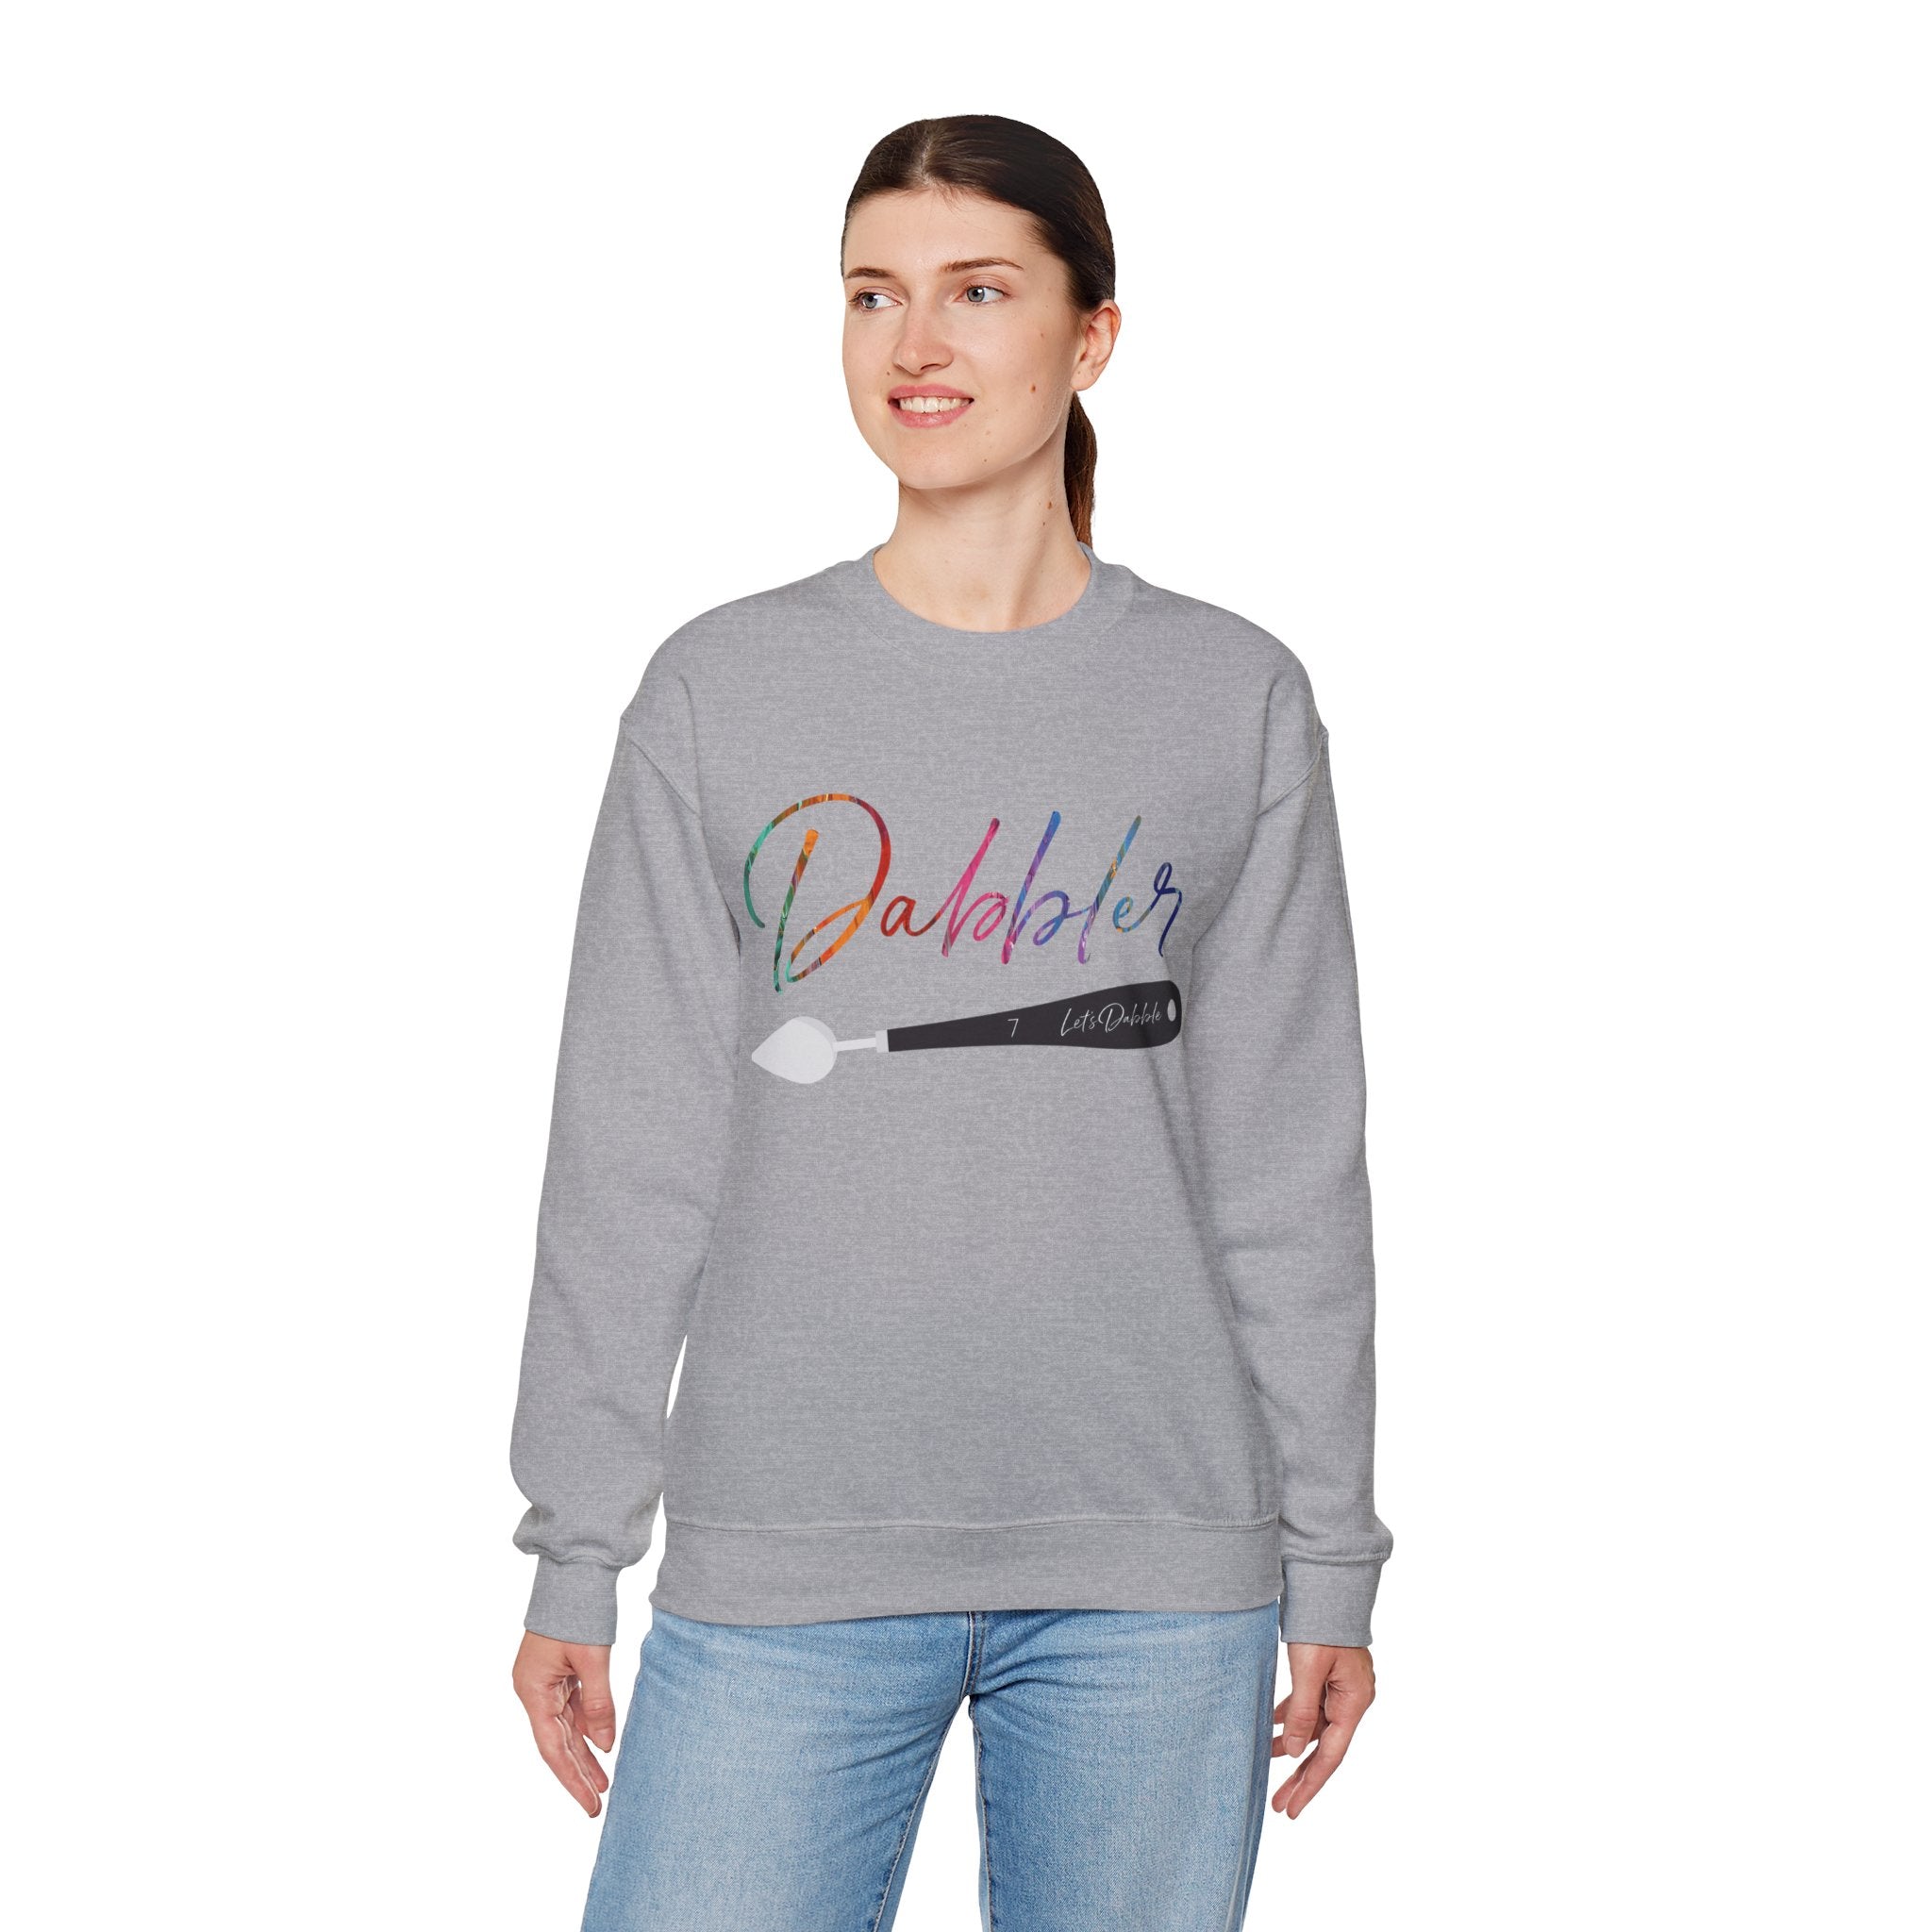 Rainbow Dabbler Crewneck Sweatshirt